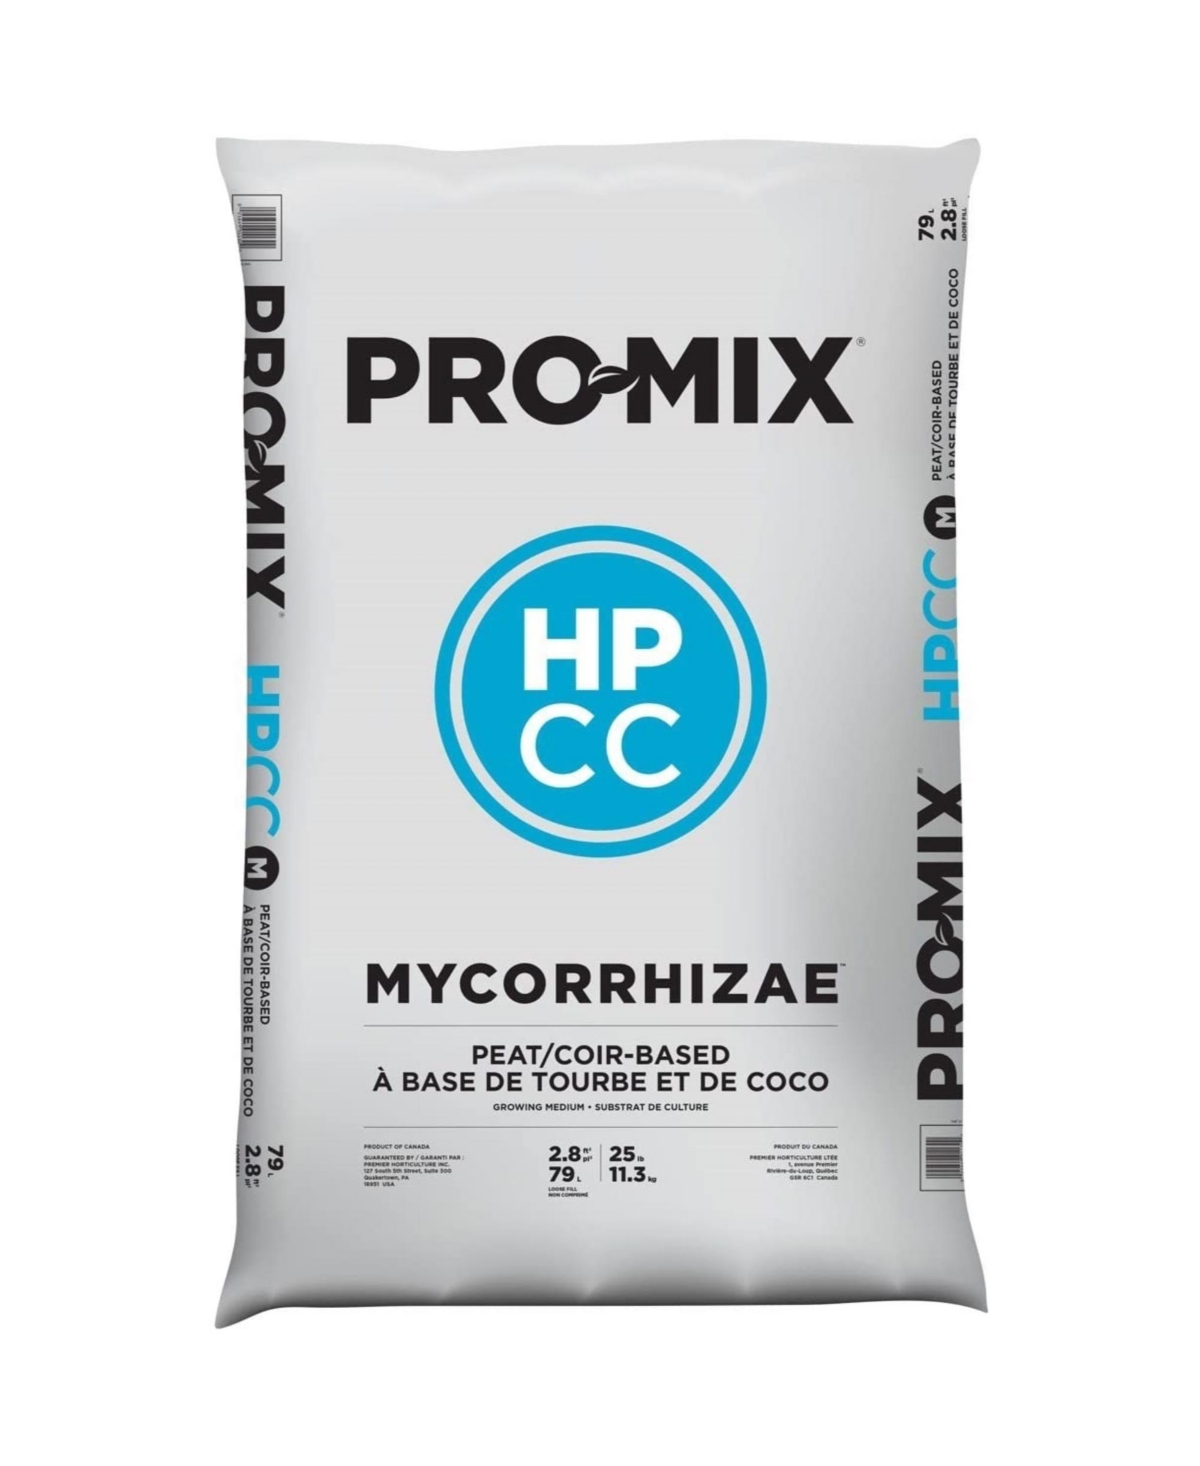 Pro-Mix Hp-cc Peat/Coir Grow Mix, 2.8cuft - Multi